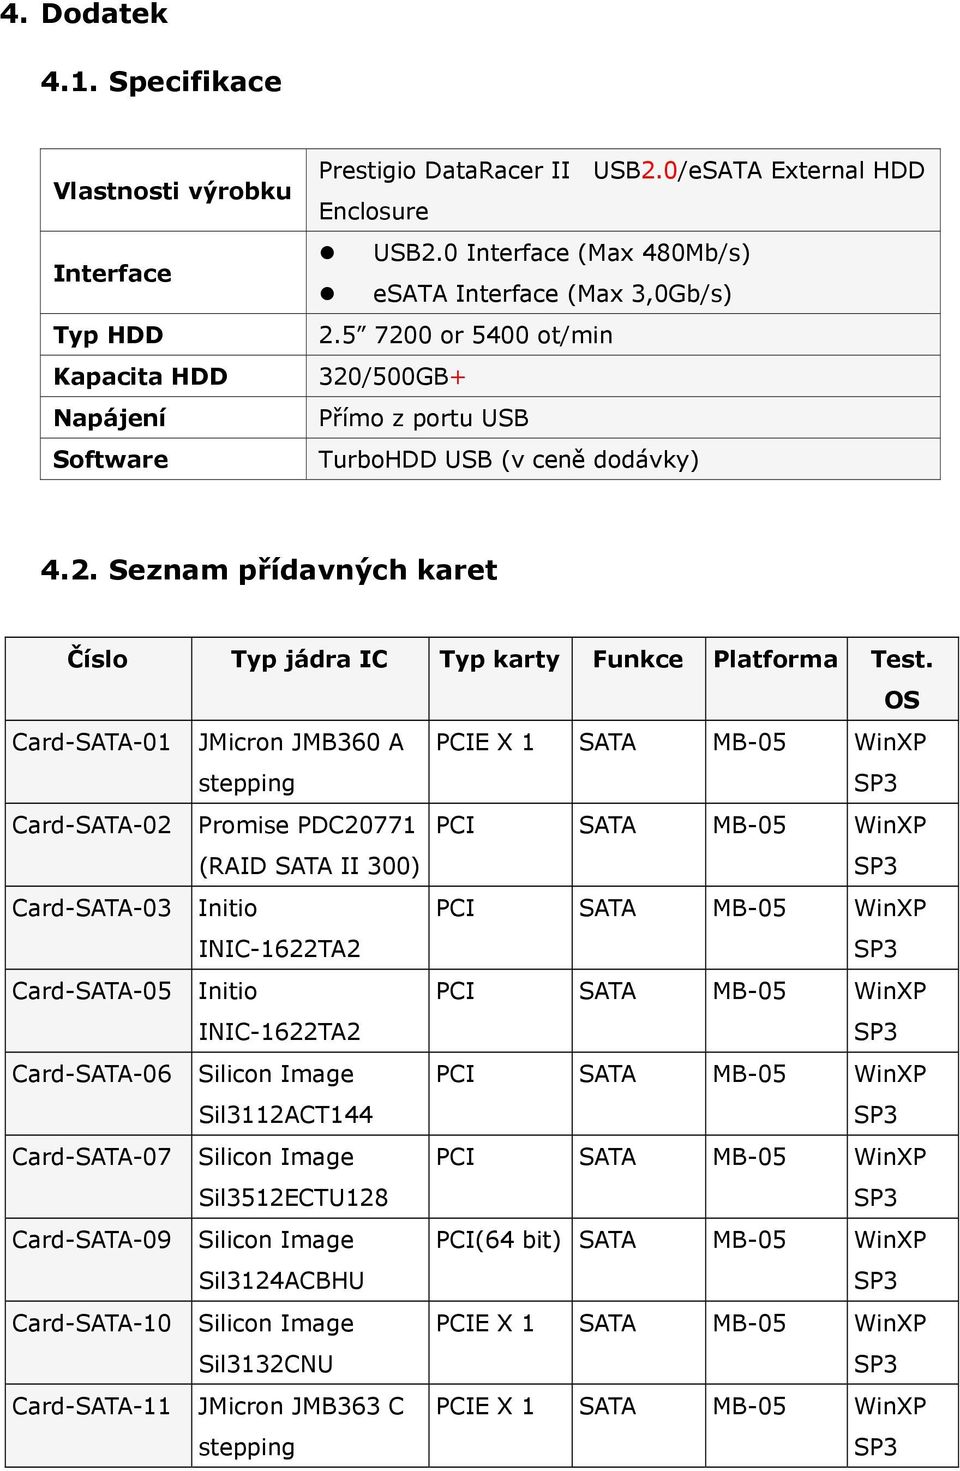 OS Card-SATA-01 JMicron JMB360 A stepping PCIE X 1 SATA MB-05 WinXP Card-SATA-02 Promise PDC20771 (RAID SATA II 300) PCI SATA MB-05 WinXP Card-SATA-03 Initio INIC-1622TA2 PCI SATA MB-05 WinXP